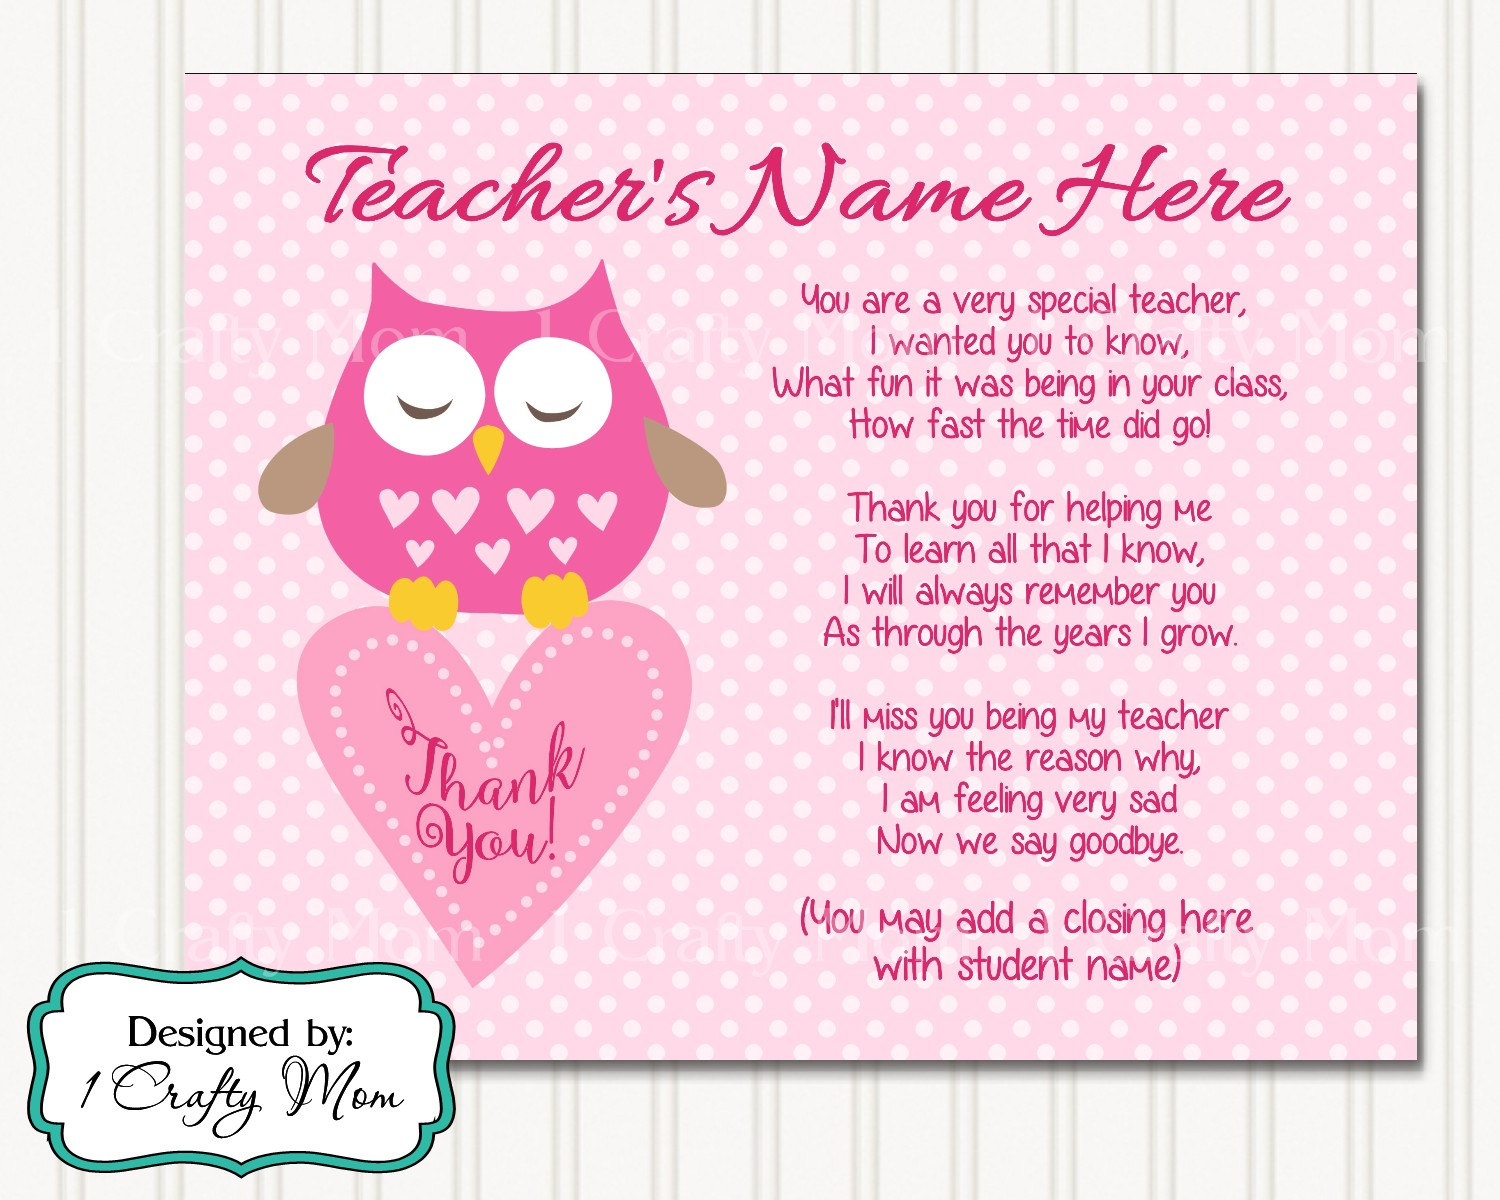 Thank you teacher poem. Poems for teachers. What is a teacher? Poem. Thank you poem to the teacher with name. The special teacher